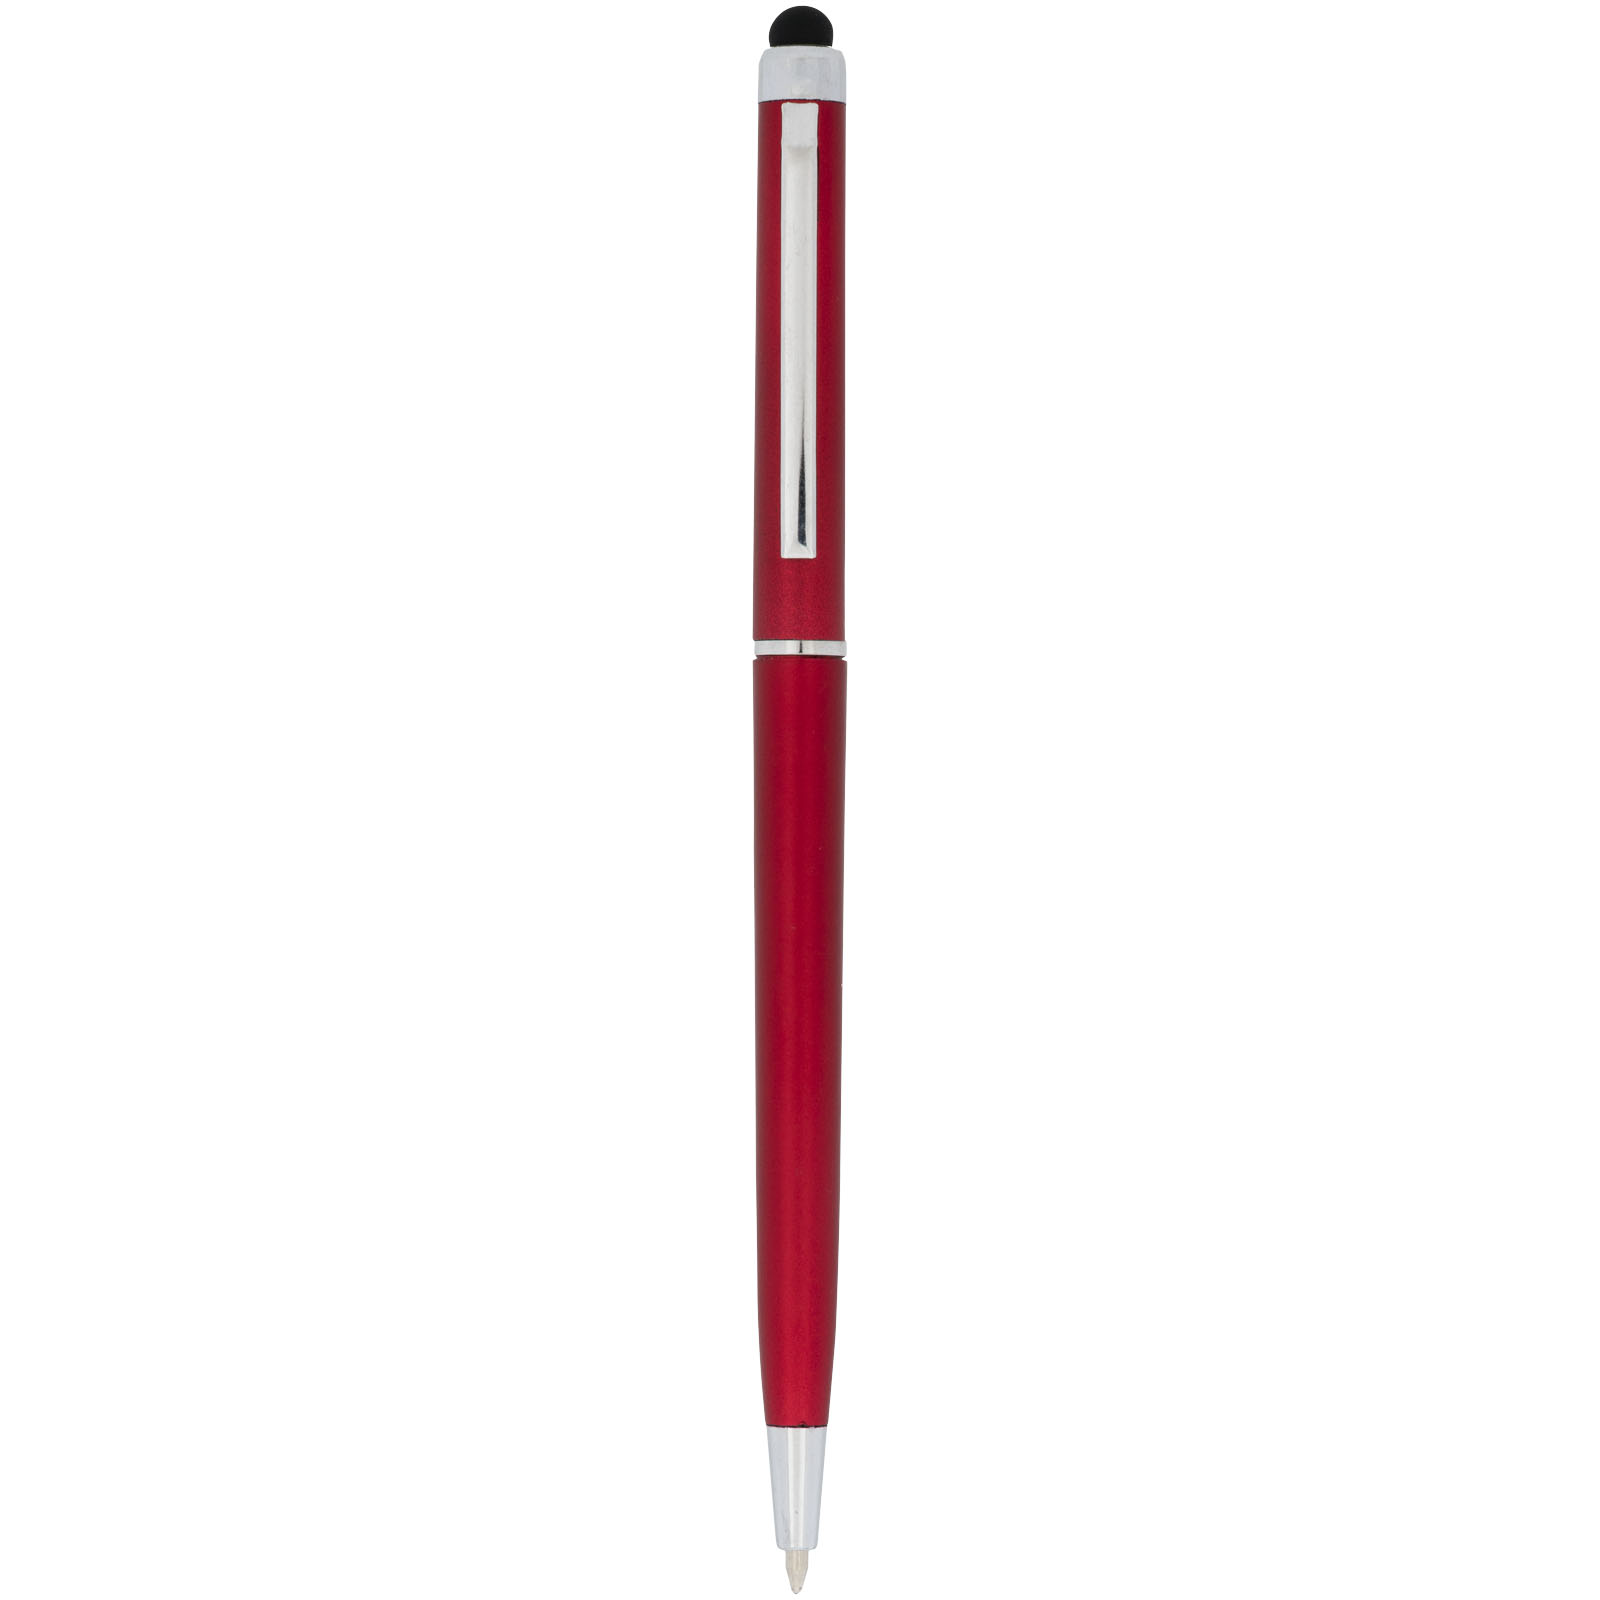 Pens & Writing - Valeria ABS ballpoint pen with stylus